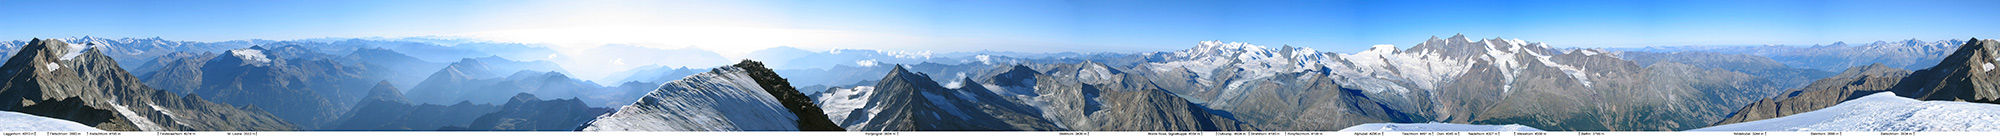 Фотообои панорама горных вершин (nature-00361)